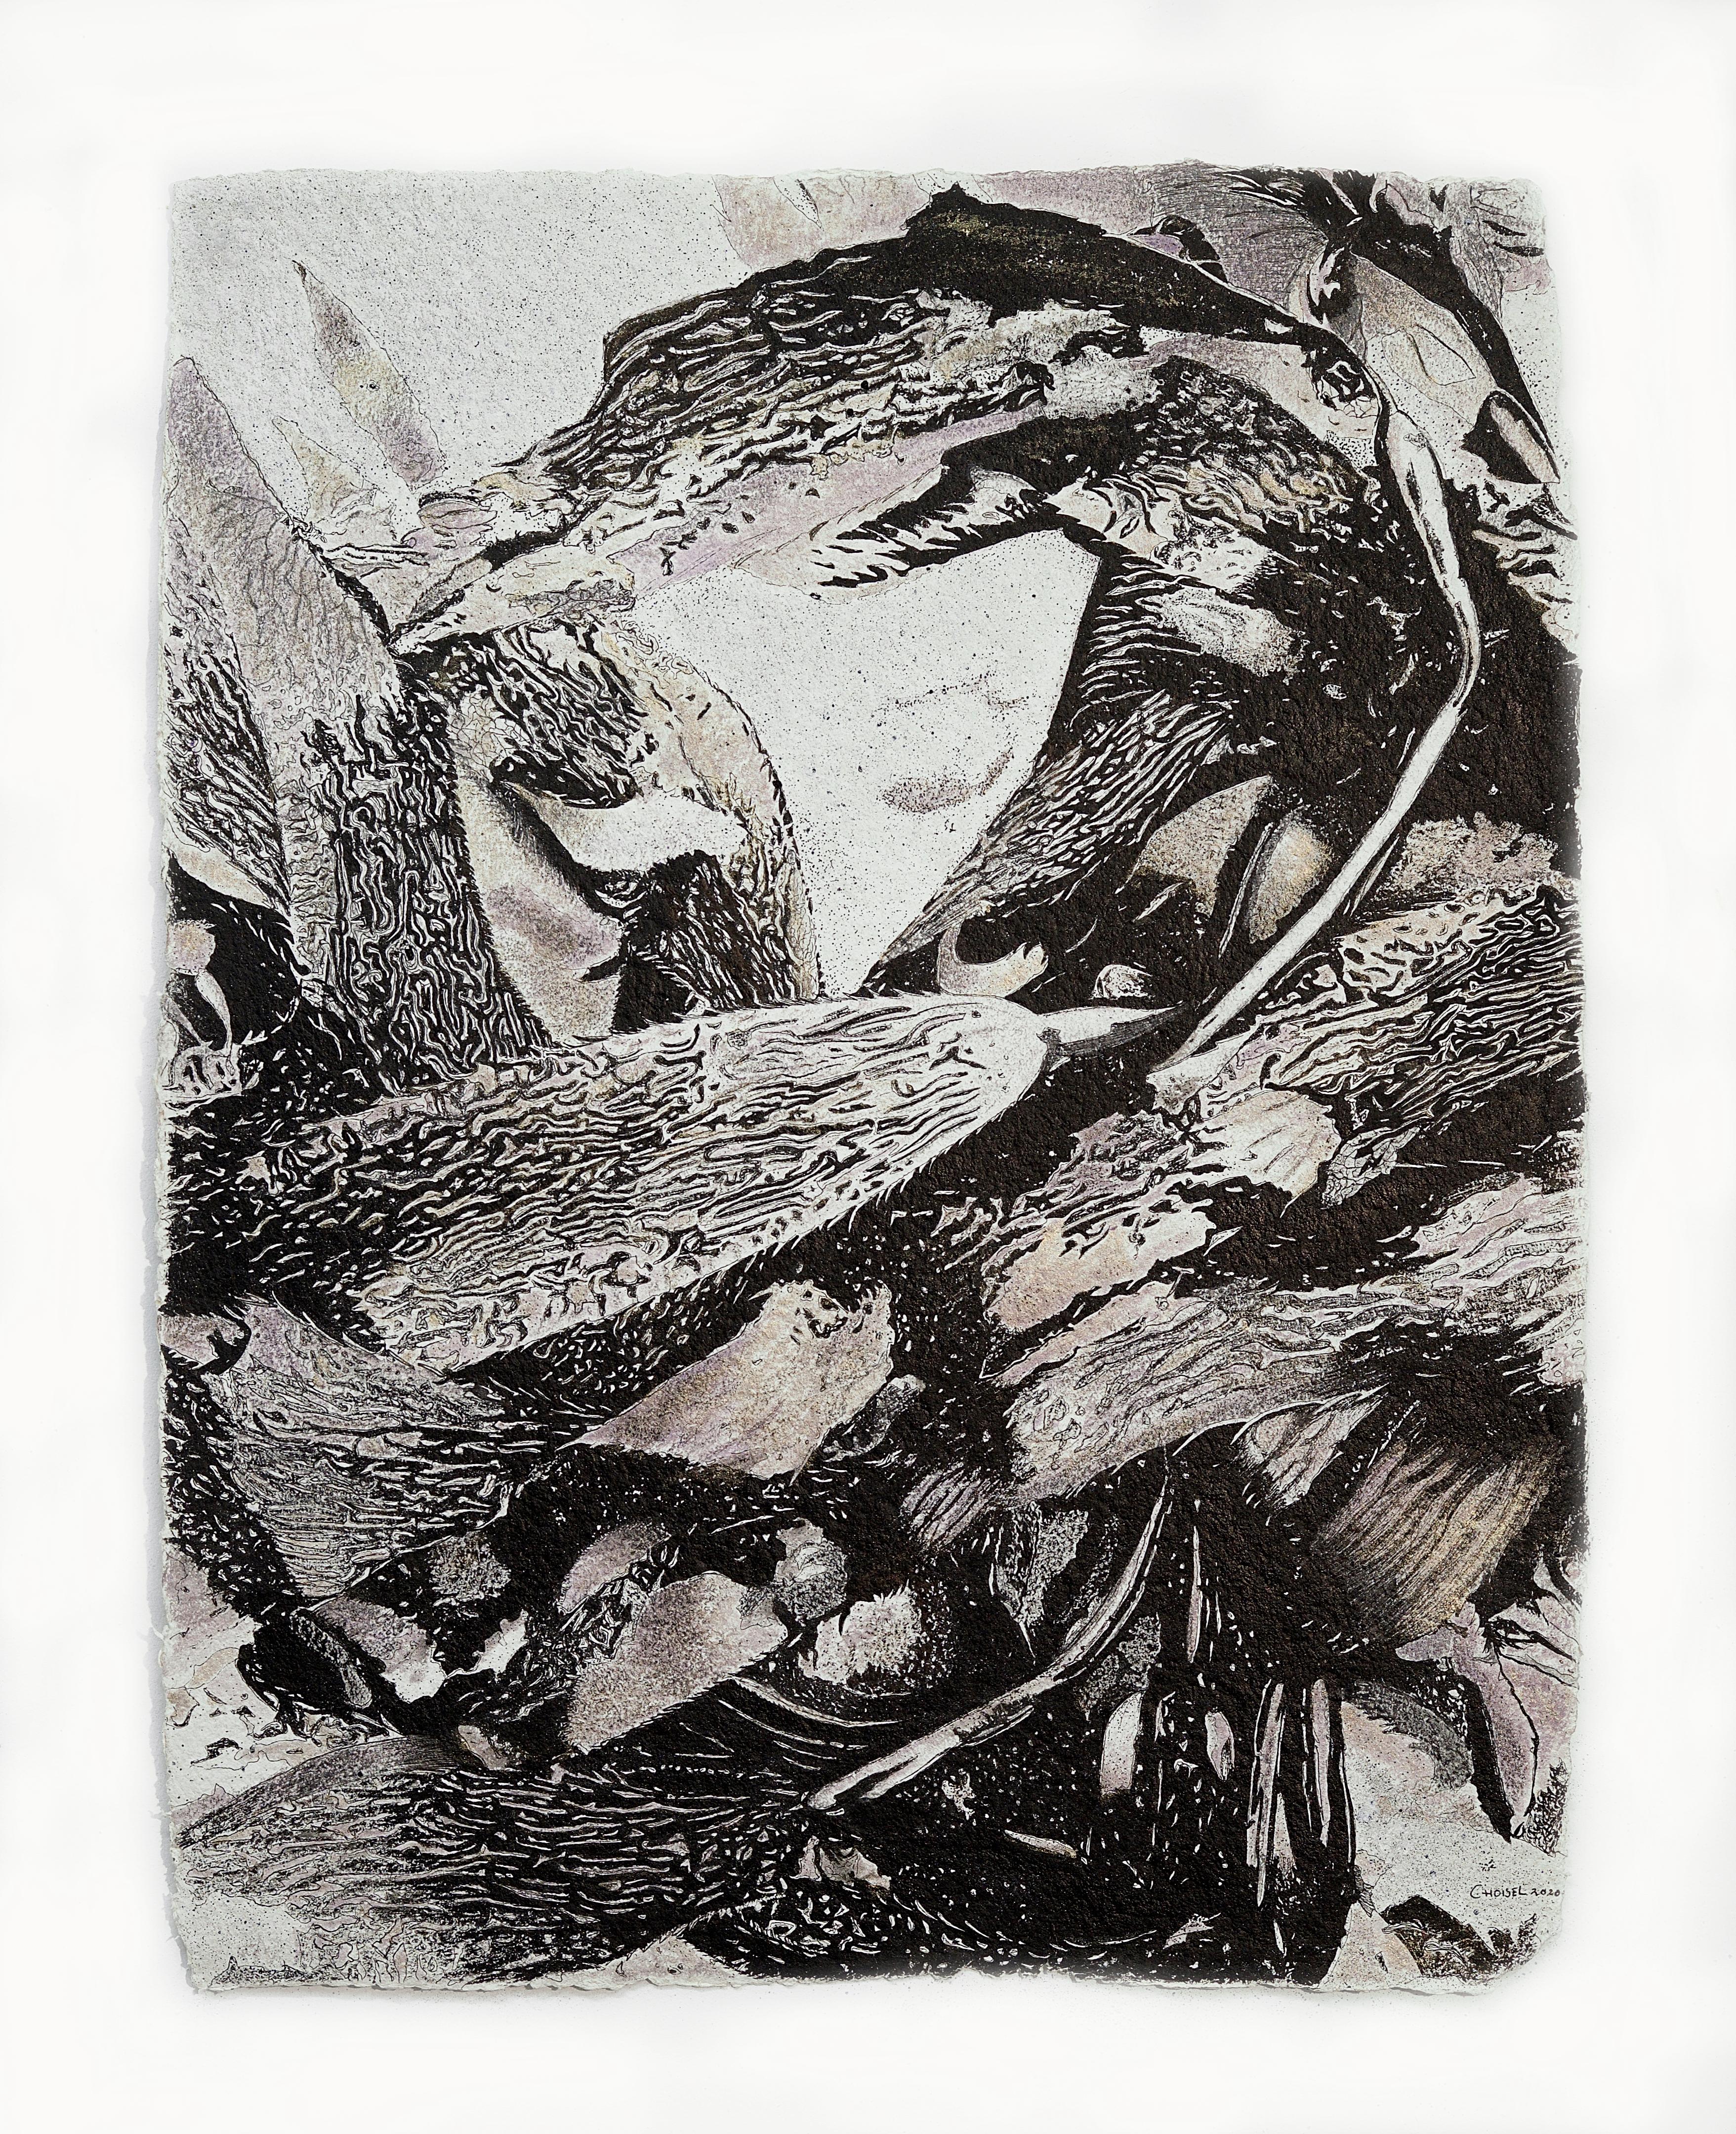 Frédéric Choisel Abstract Painting - Alga Aligata No. 5 - seaweed kelp oceanic abstracted work on paper